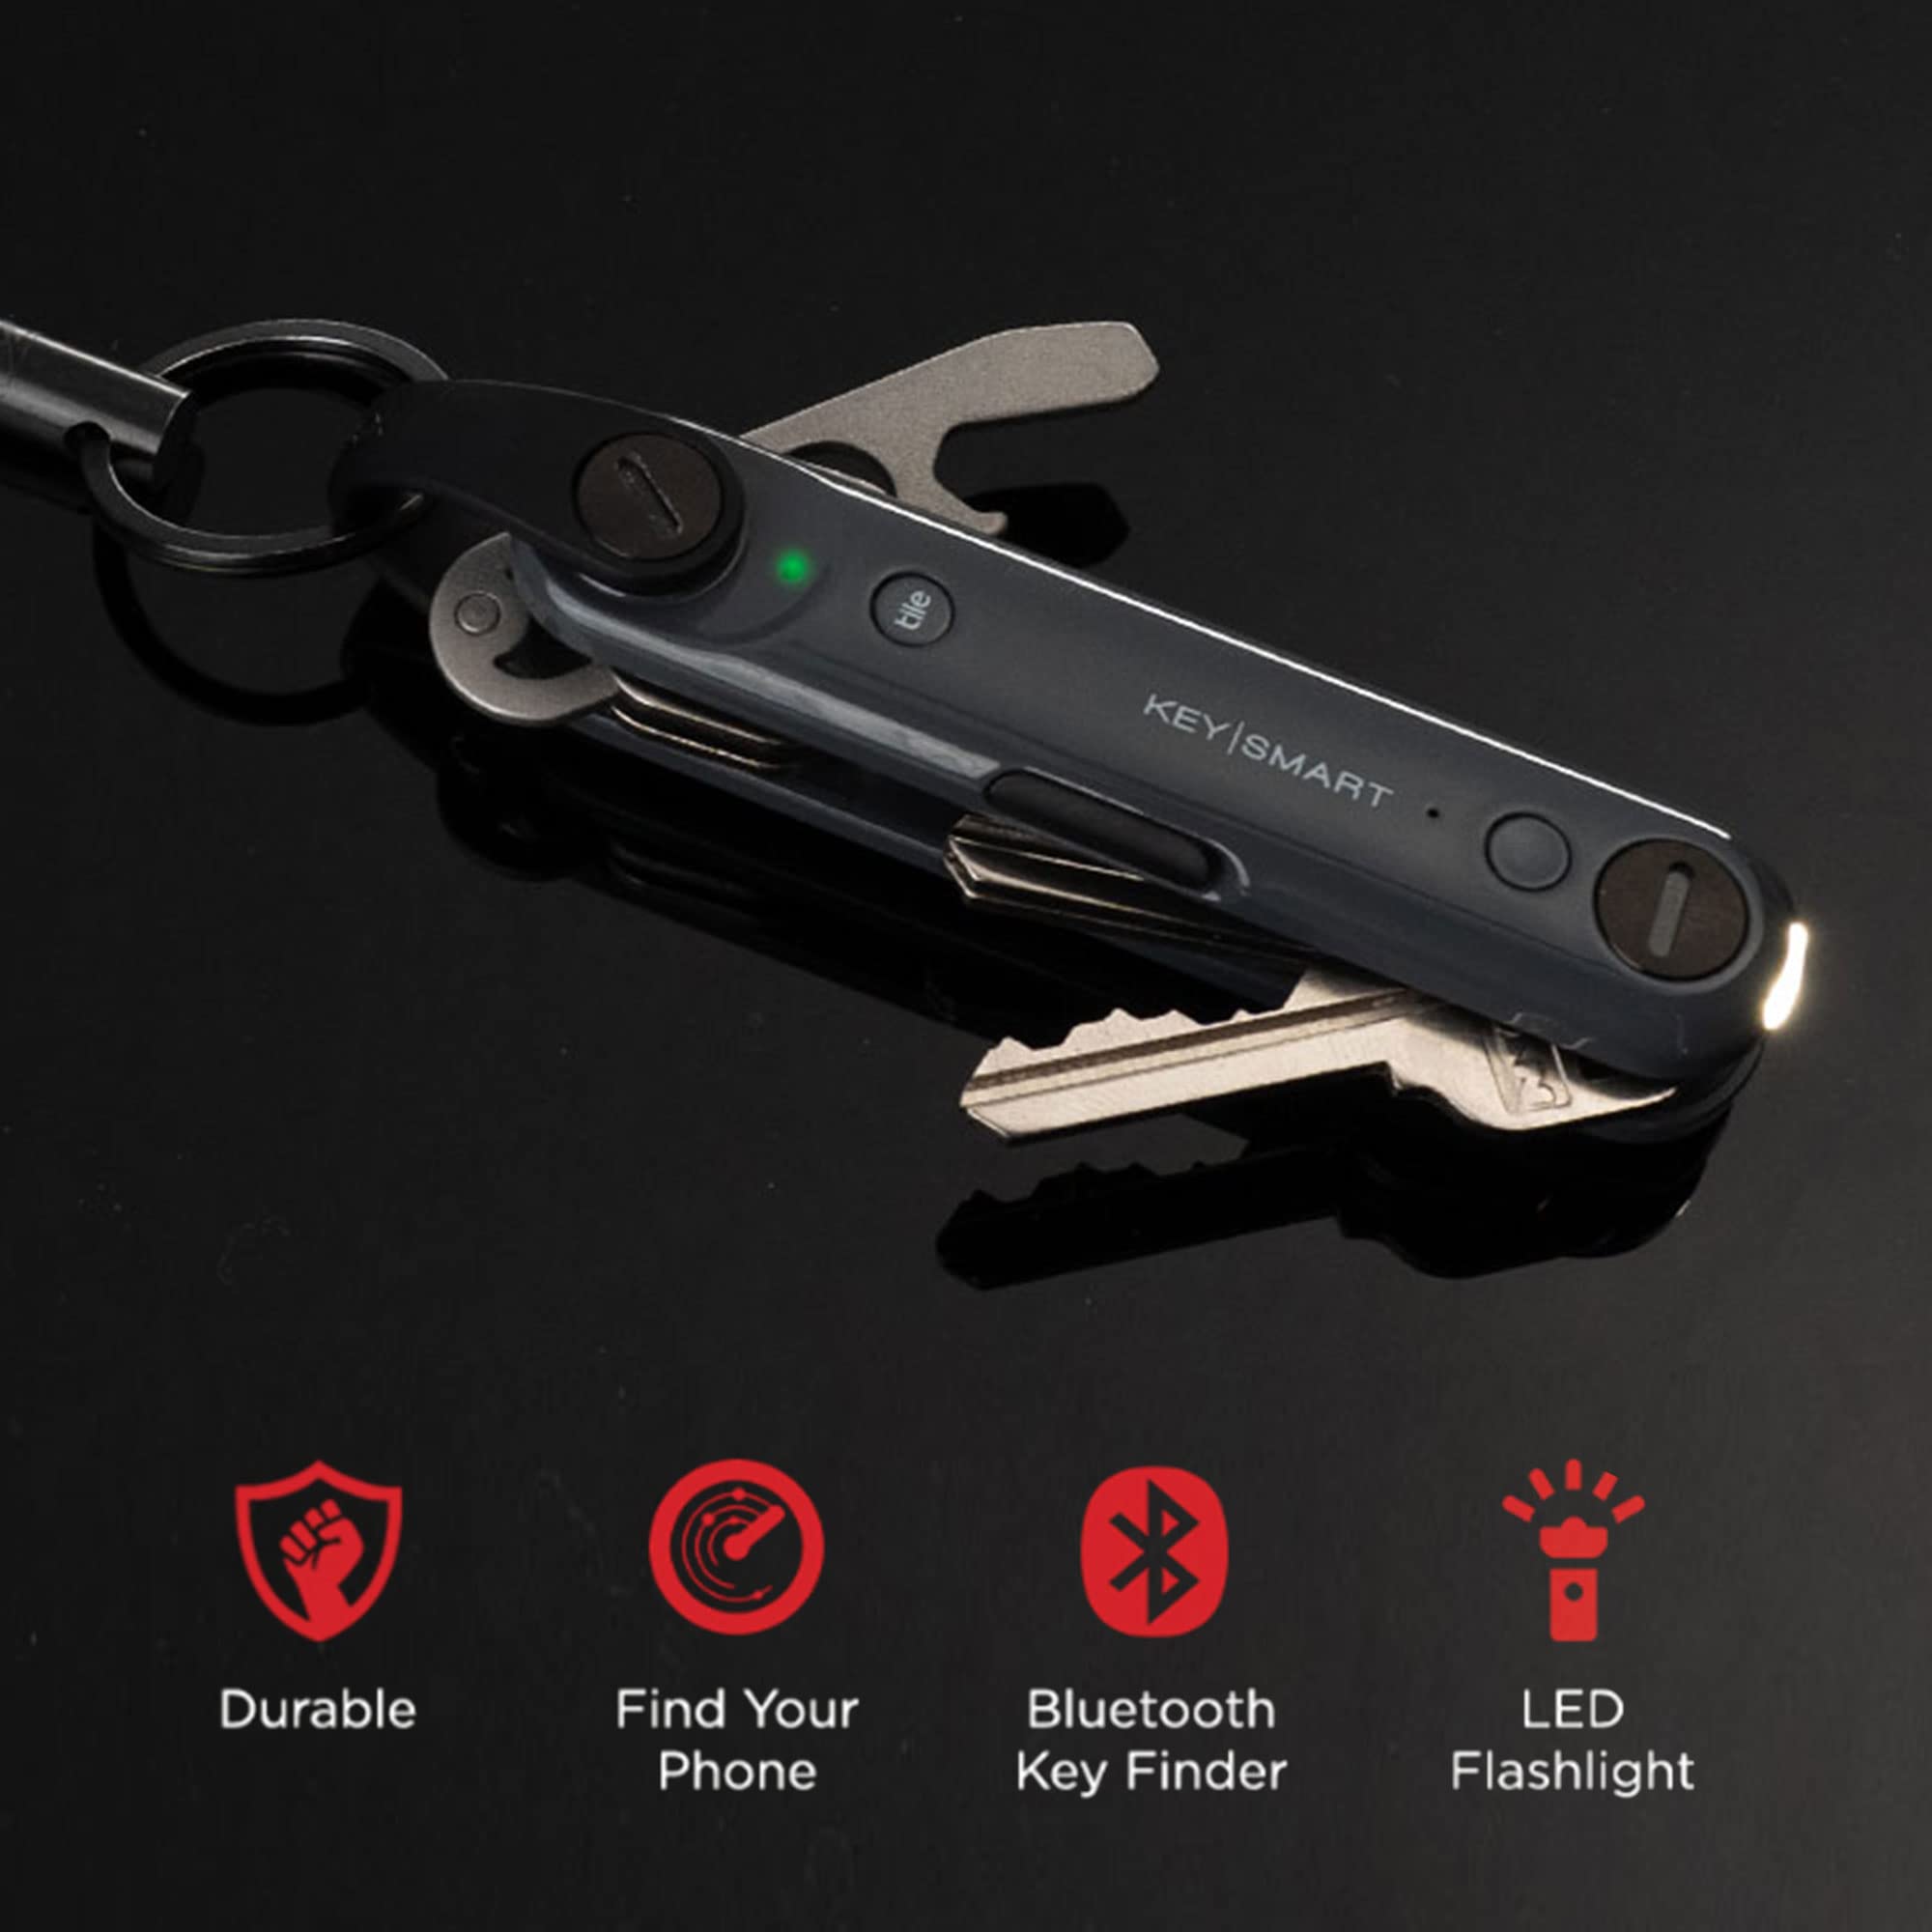 KeySmart Max Trackable Smart Key Organizer - Tile Tech Compact Keychain Key Holder, LED Flashlight, Tile Bluetooth Key Finder, Attach Car Key Fob, Keychain Accessories (up to 14 Keys, Steel Gray)